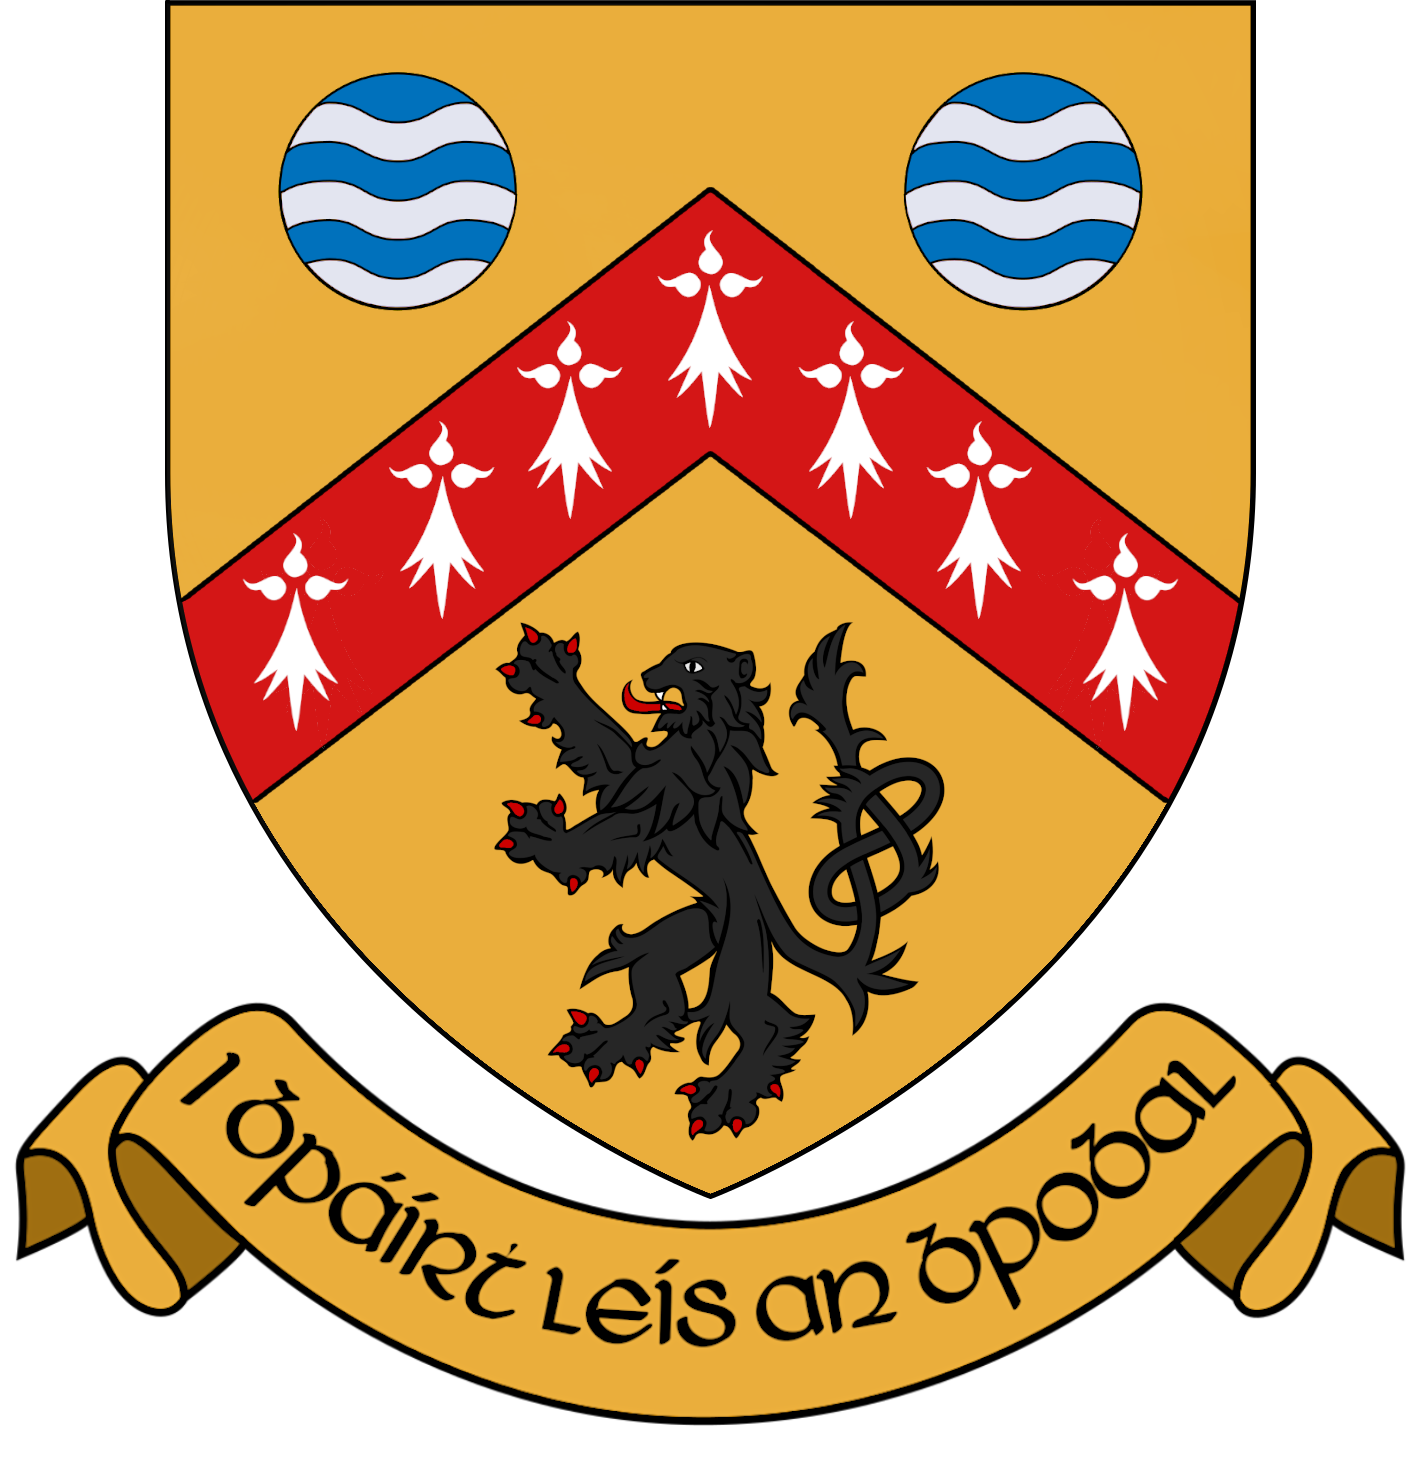 Laois County Council - Wikipedia